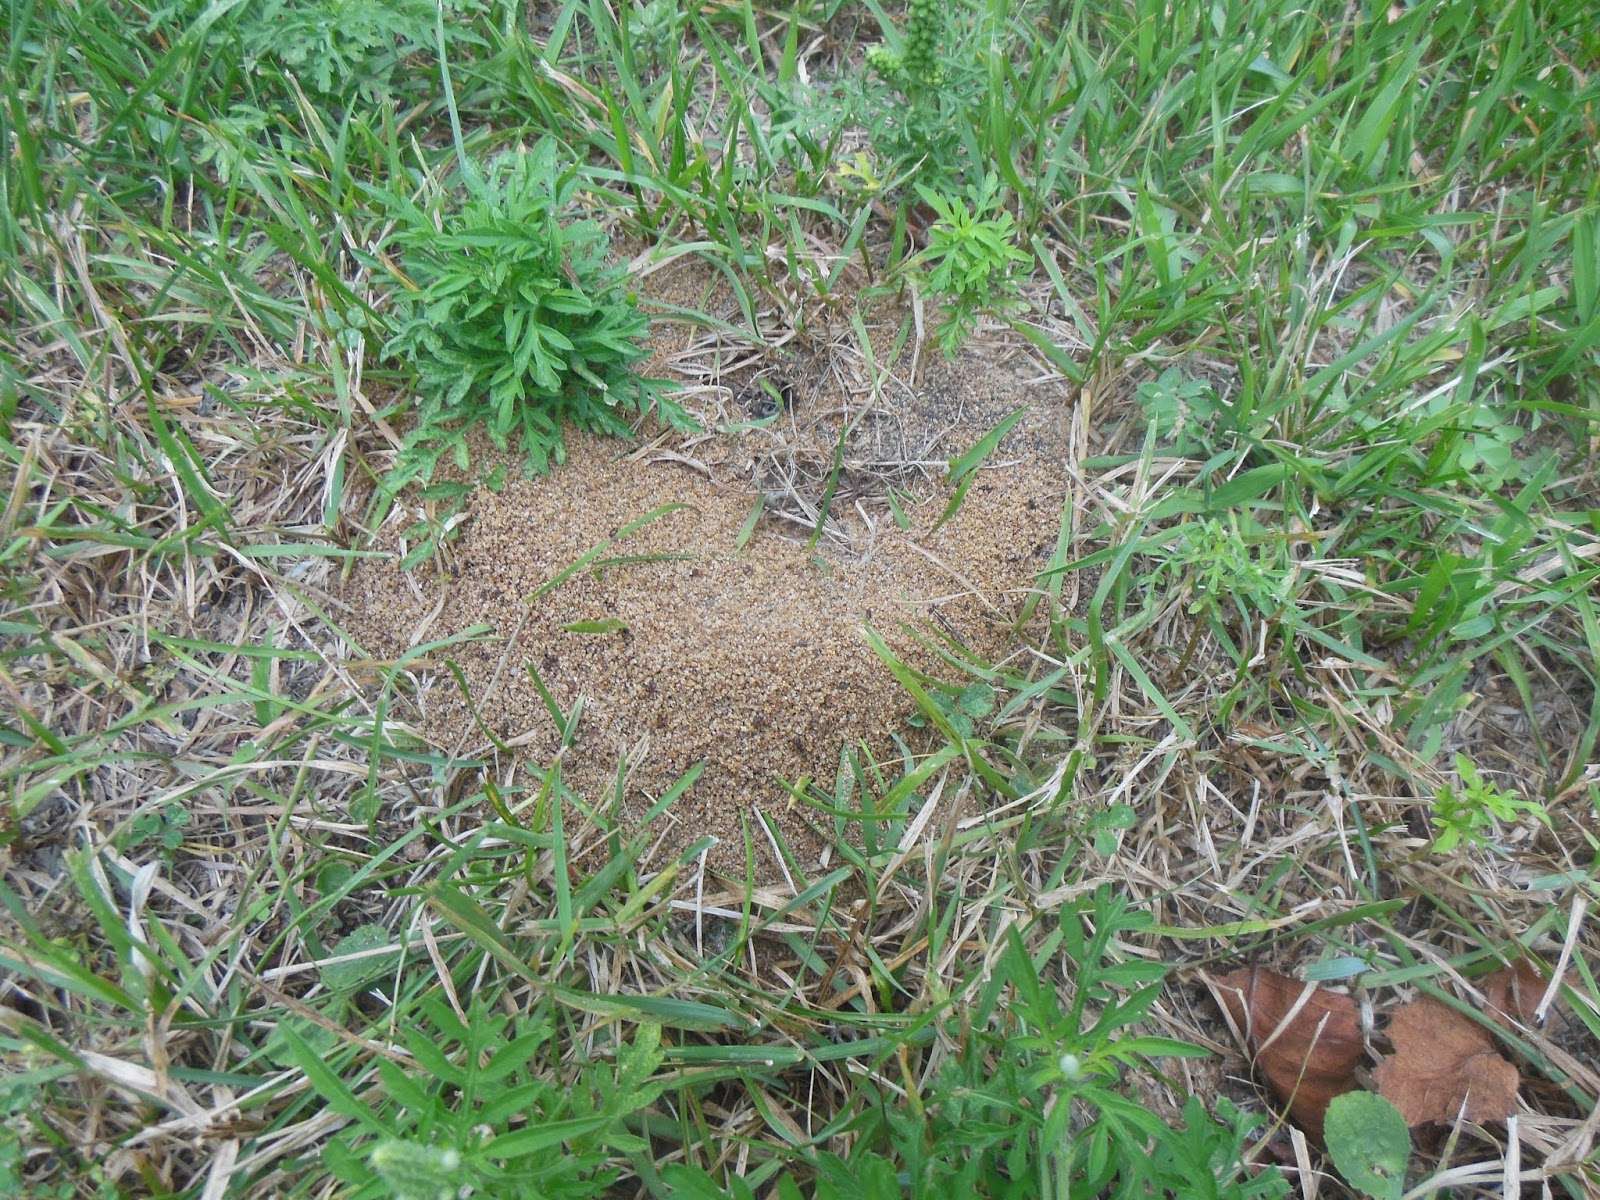 Ants in turf